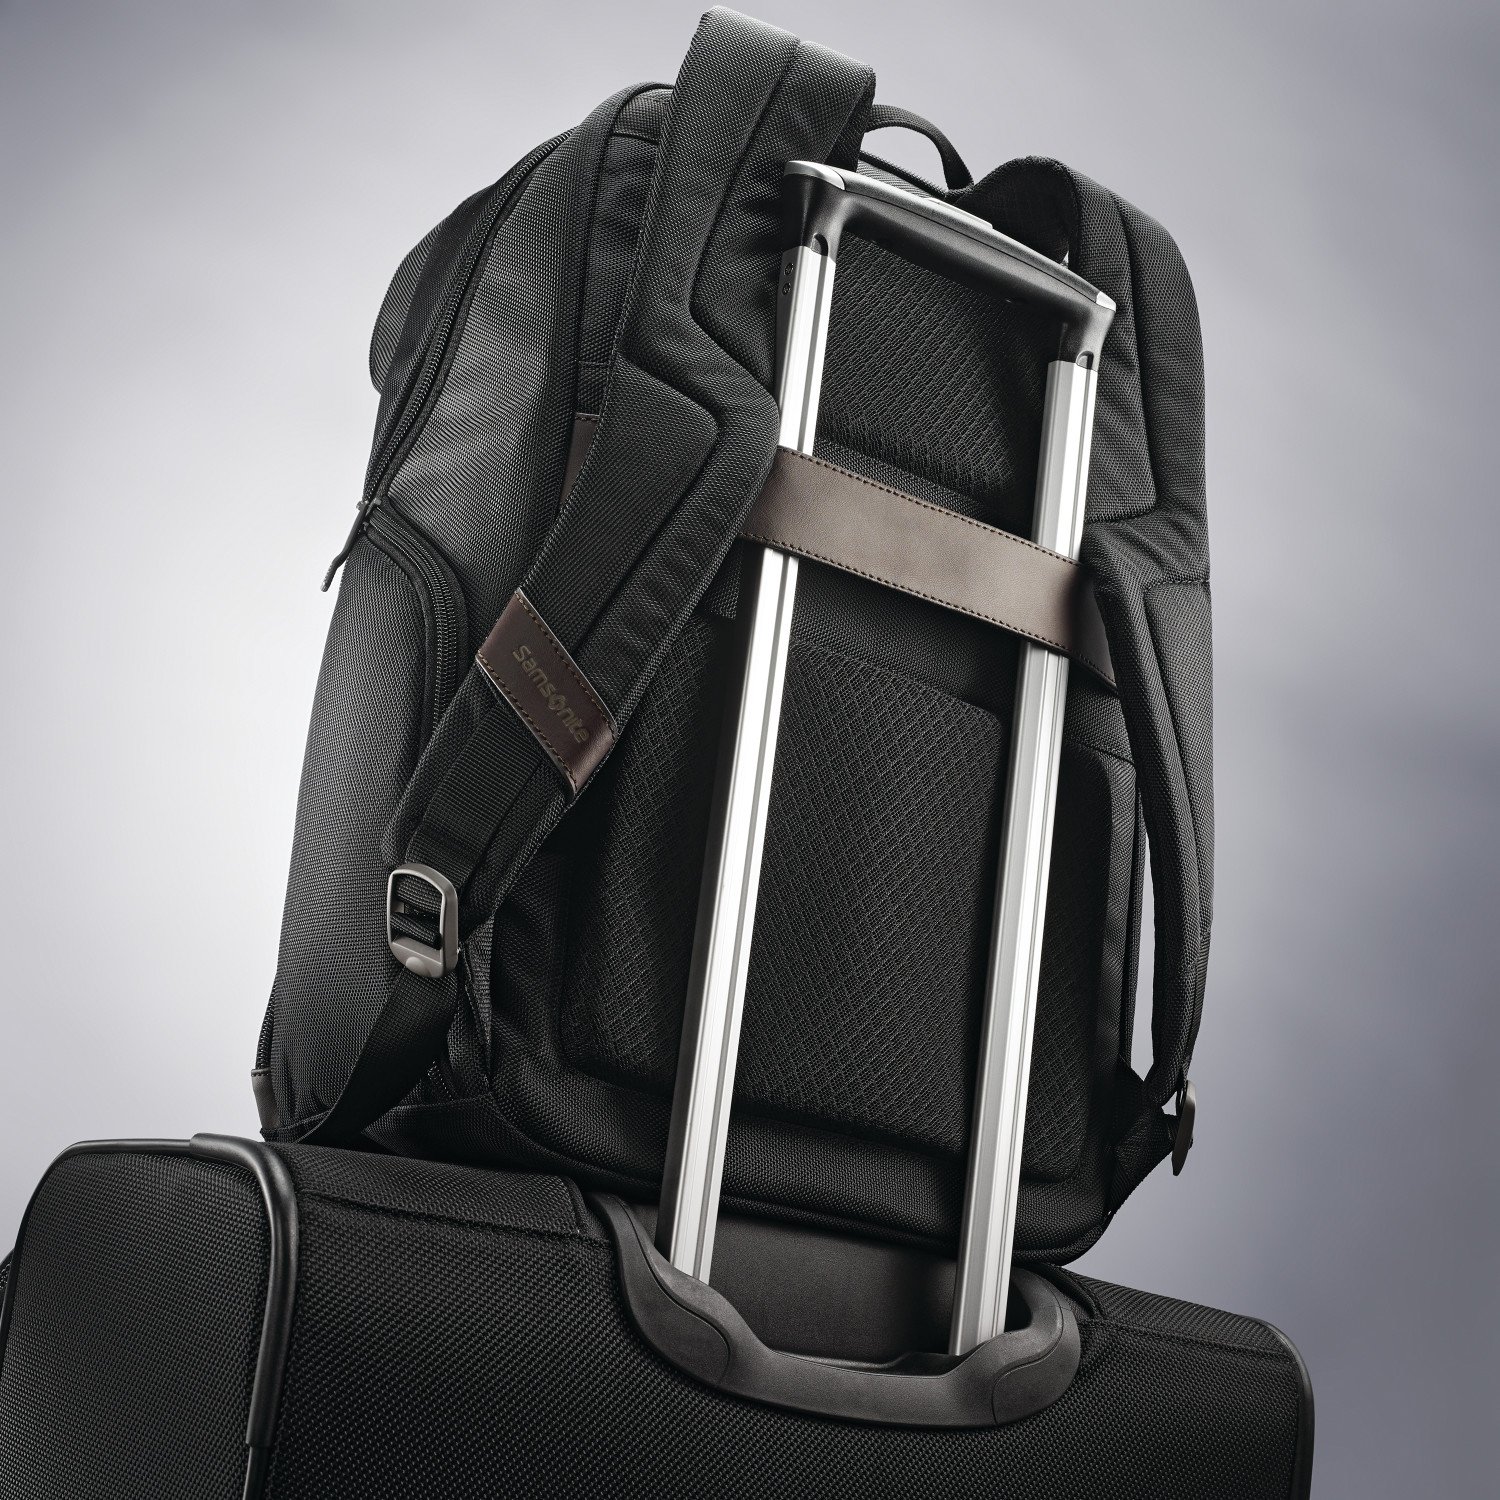 Samsonite Kombi Business Backpack, Black/Brown, 17.5 x 12 x 7-Inch